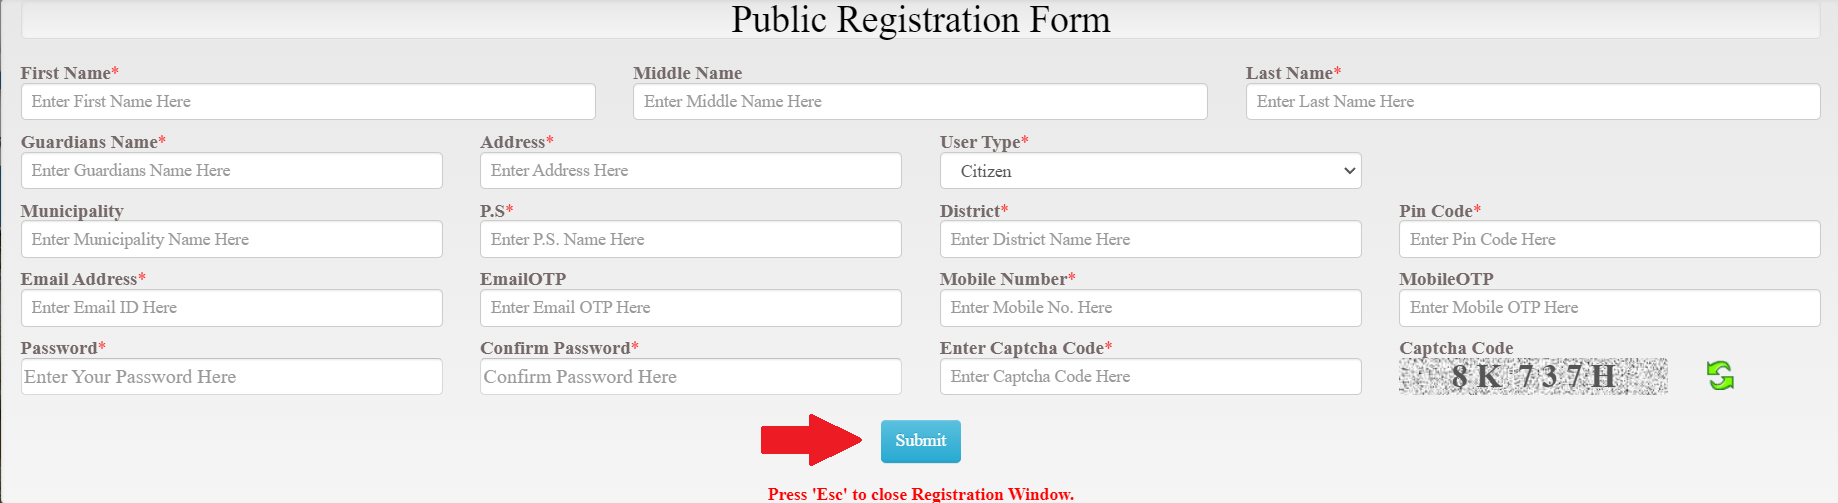 Banglarbhumi Registration